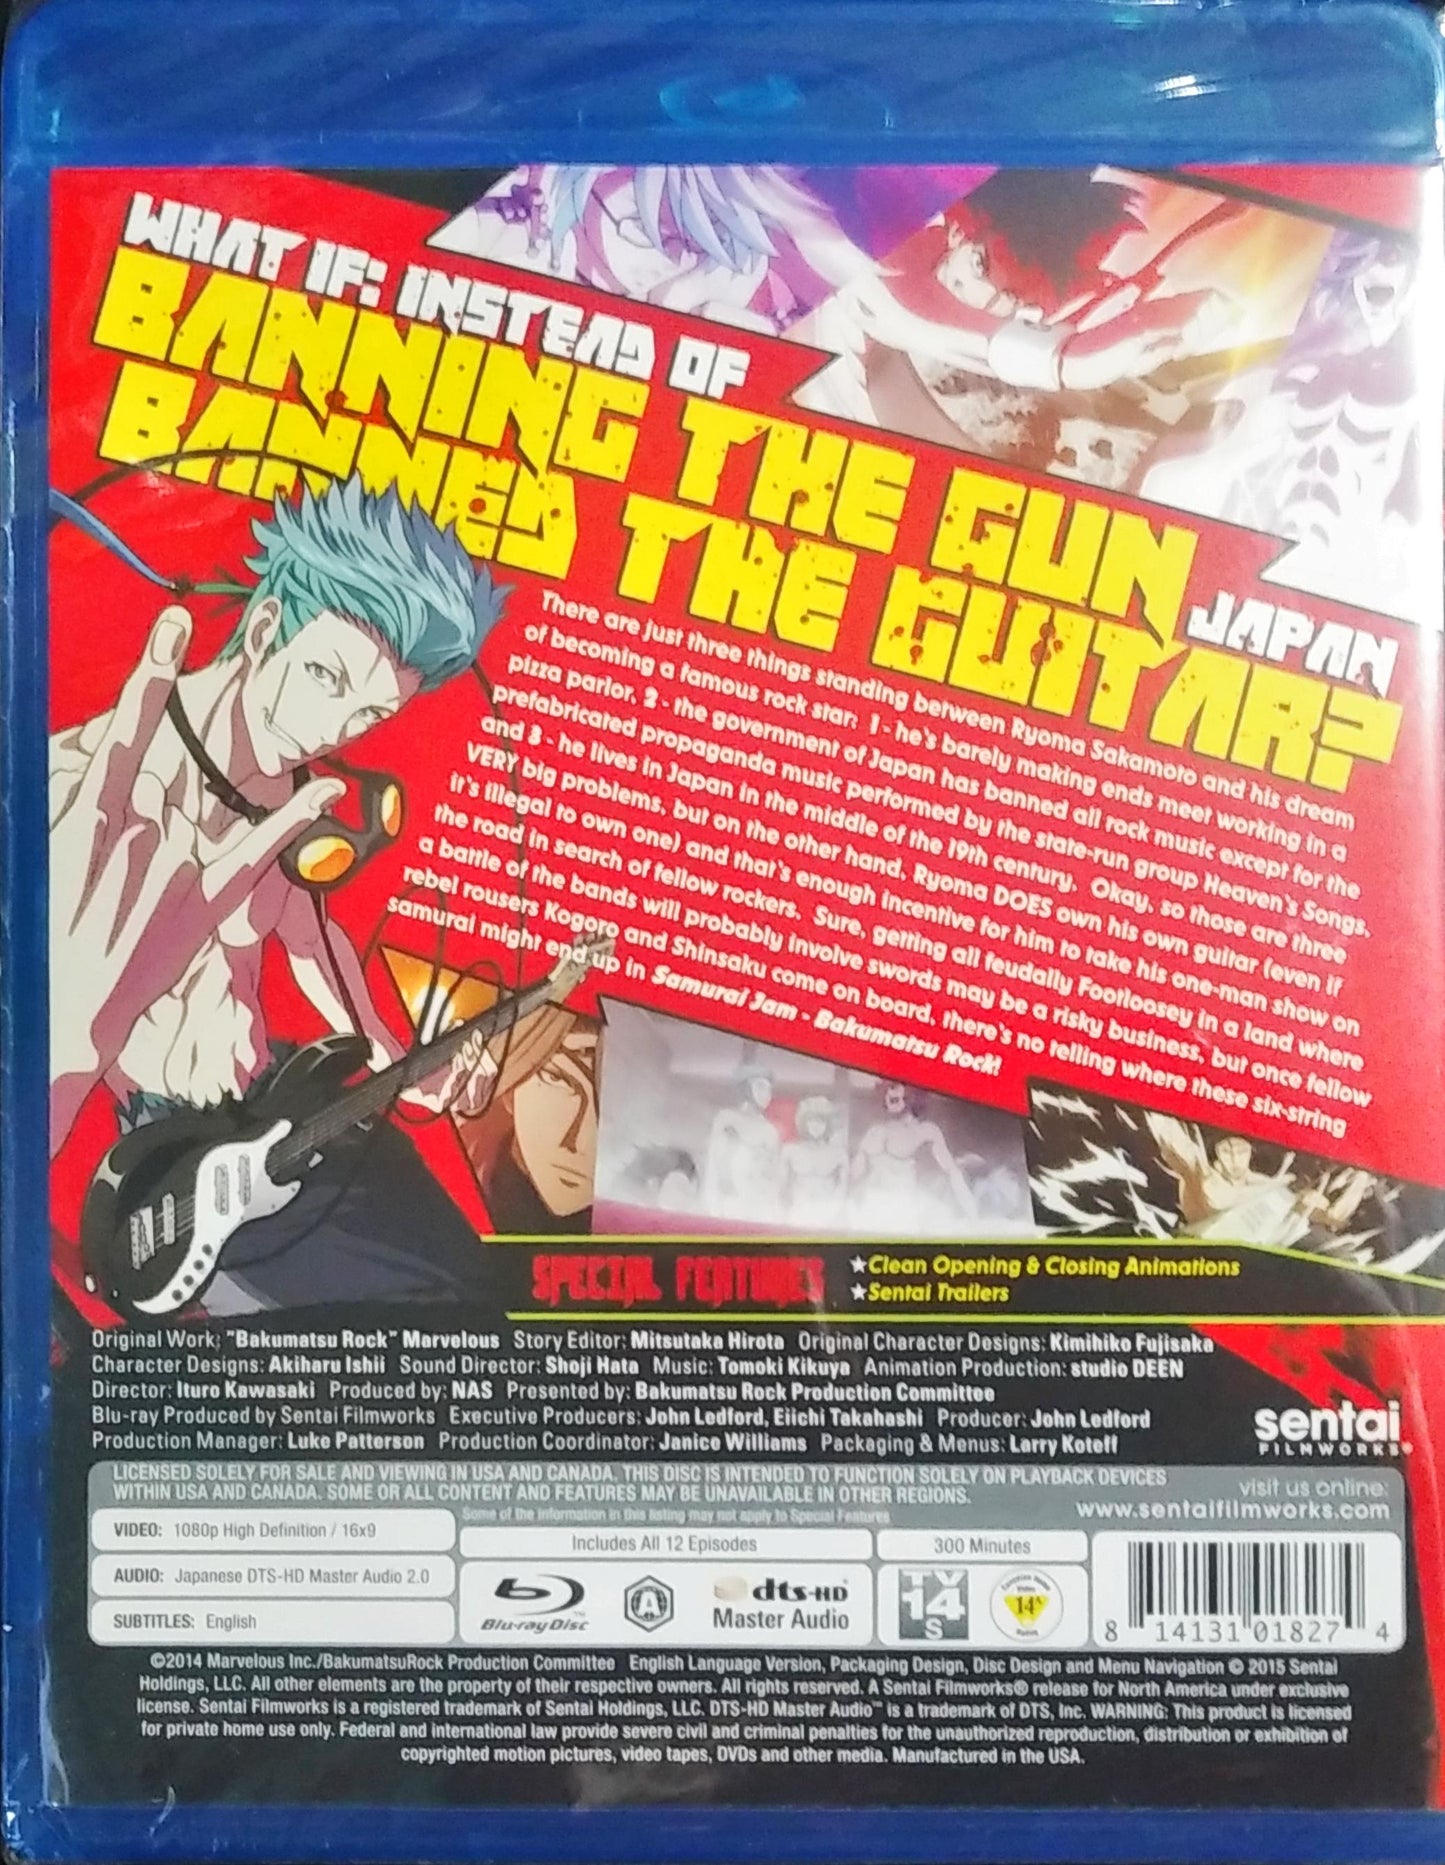 Samurai Jam : Bakumatsu Rock Blu-ray Complete Collection Sealed